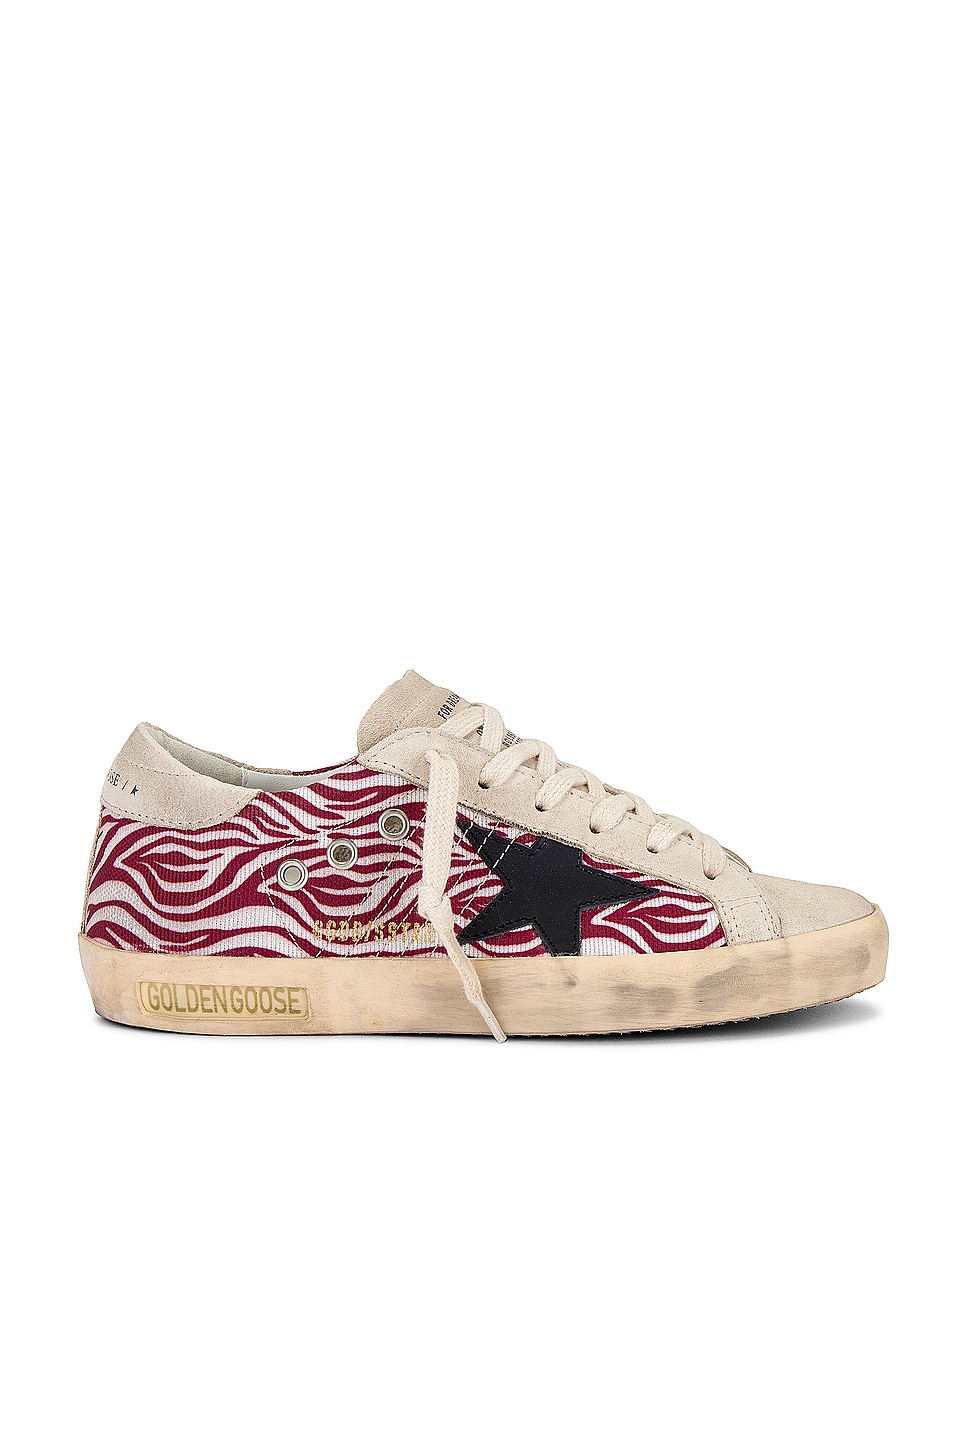 Golden Goose Super Star Sneaker in Cream Red Zebra, Beige, & Black | REVOLVE